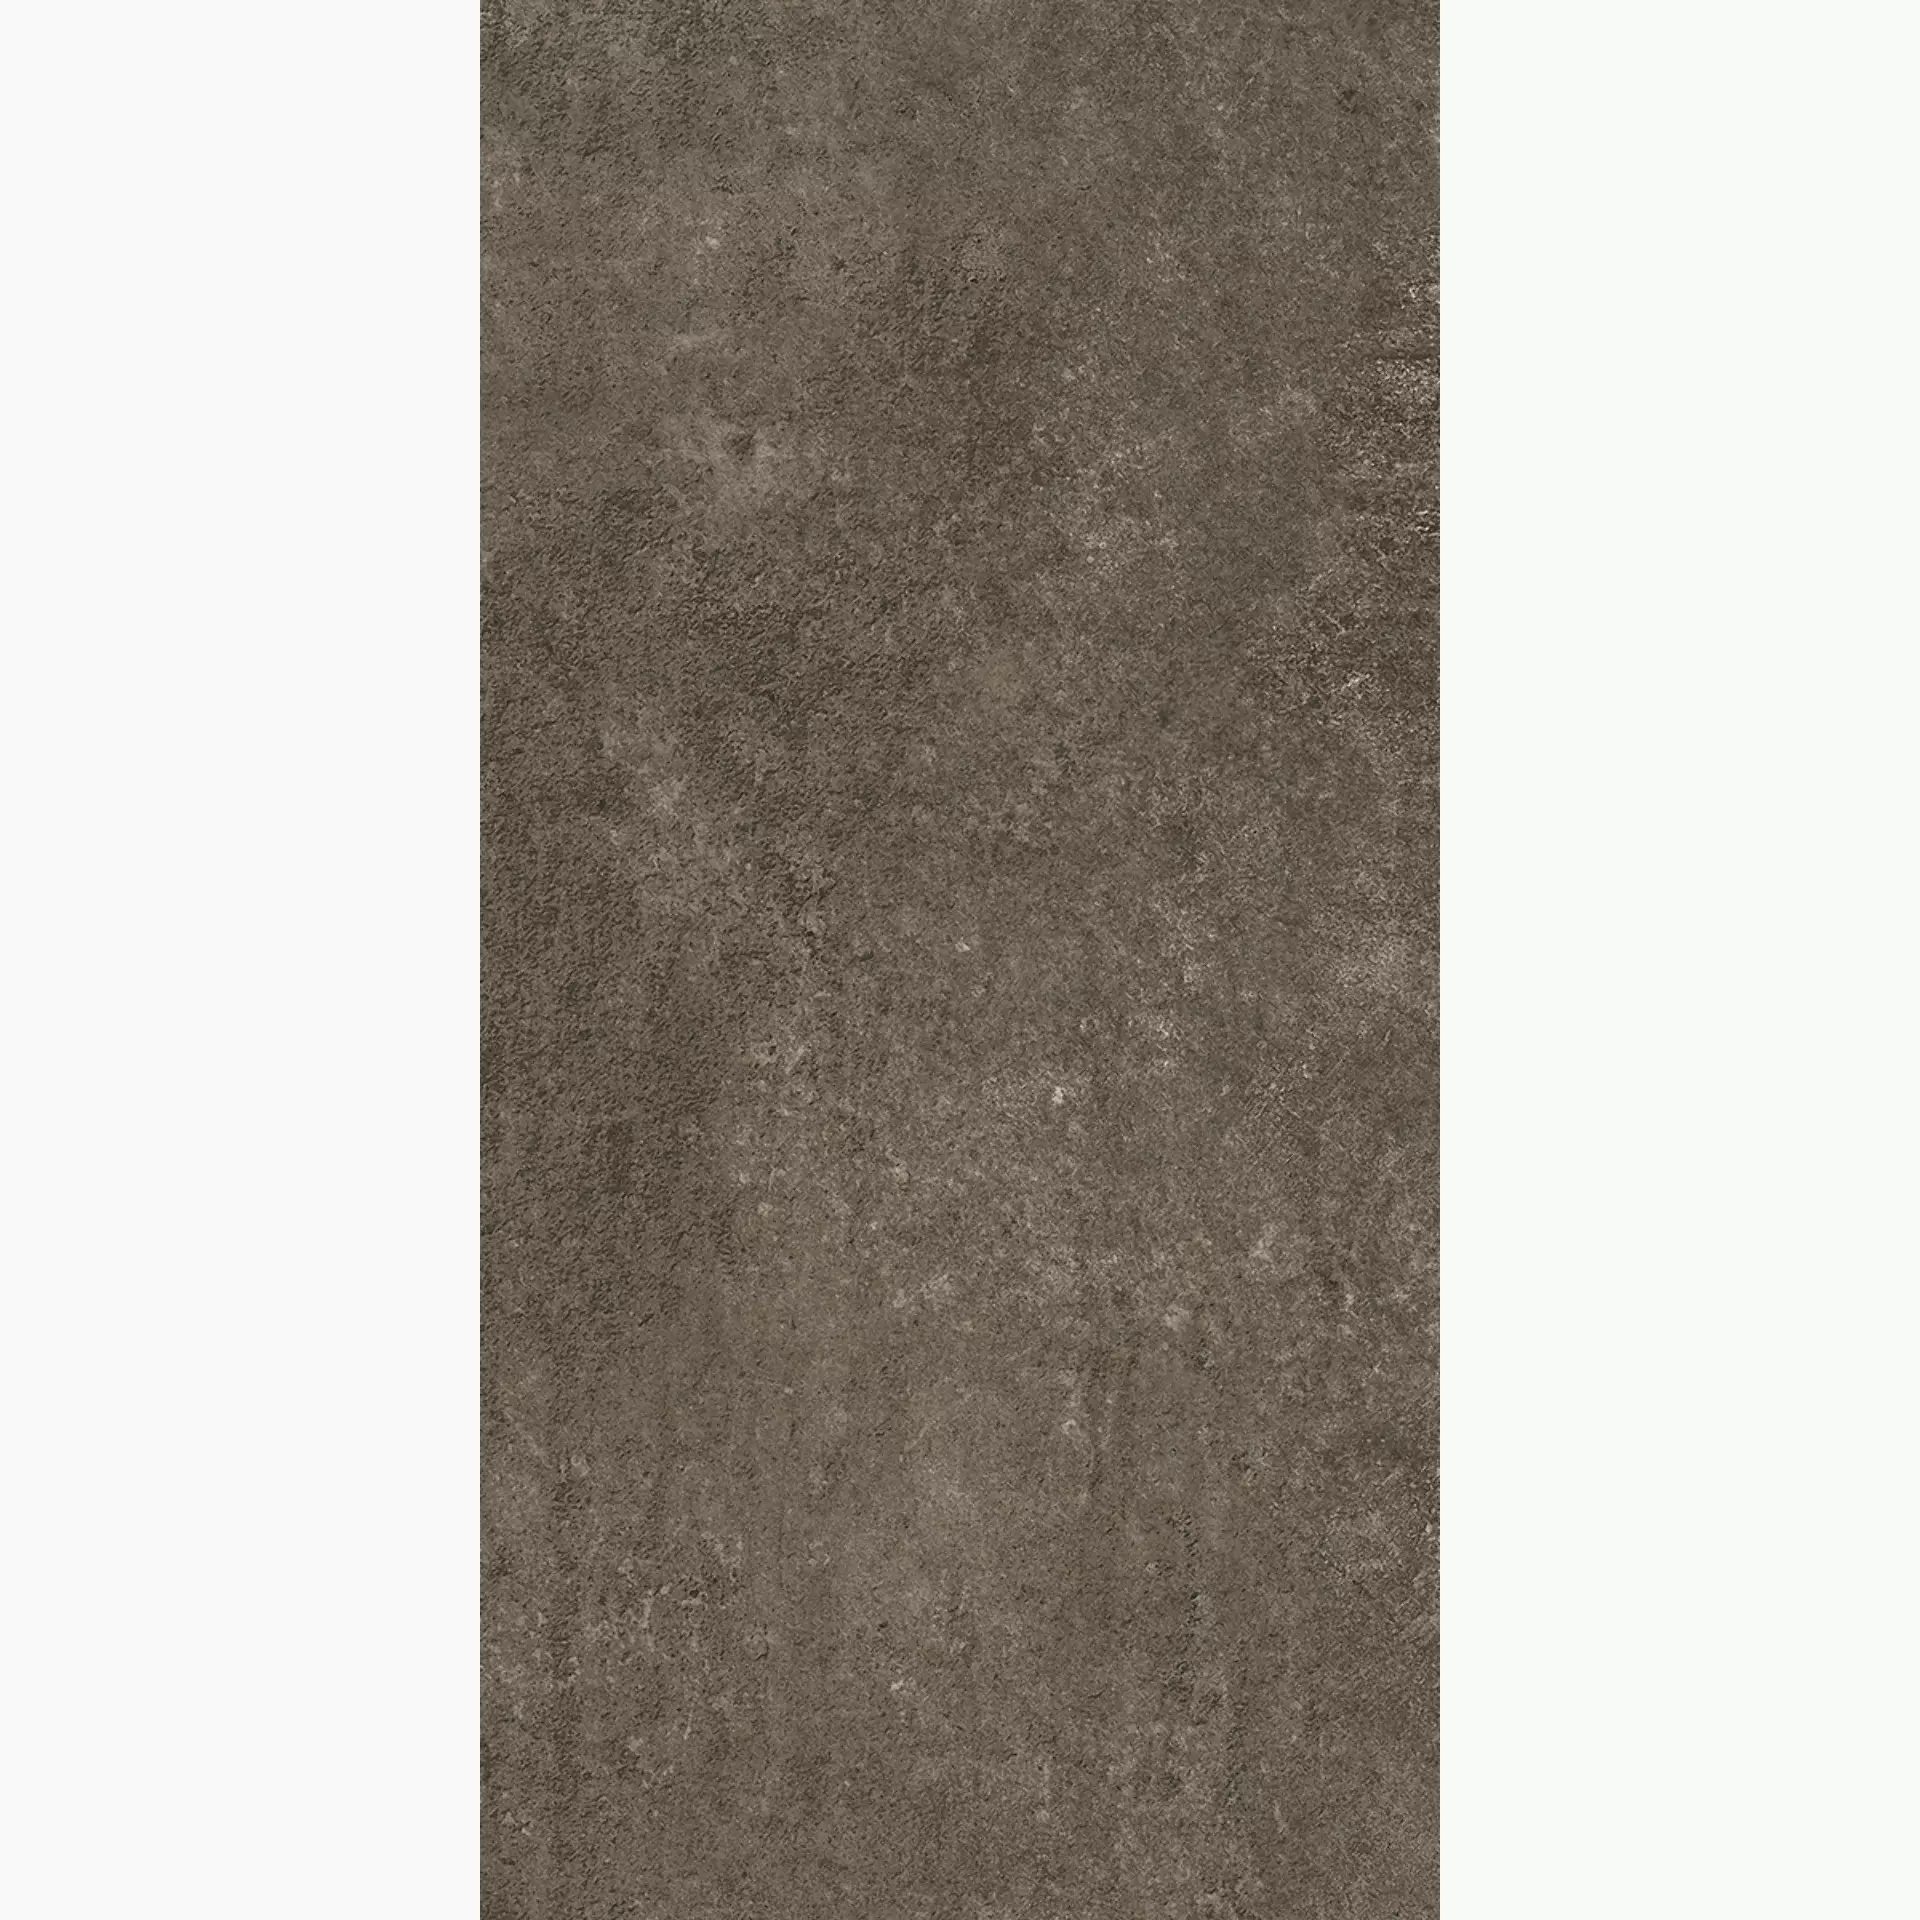 Tagina Apogeo Anthracite Naturale 113355 30x60cm rectified 10mm